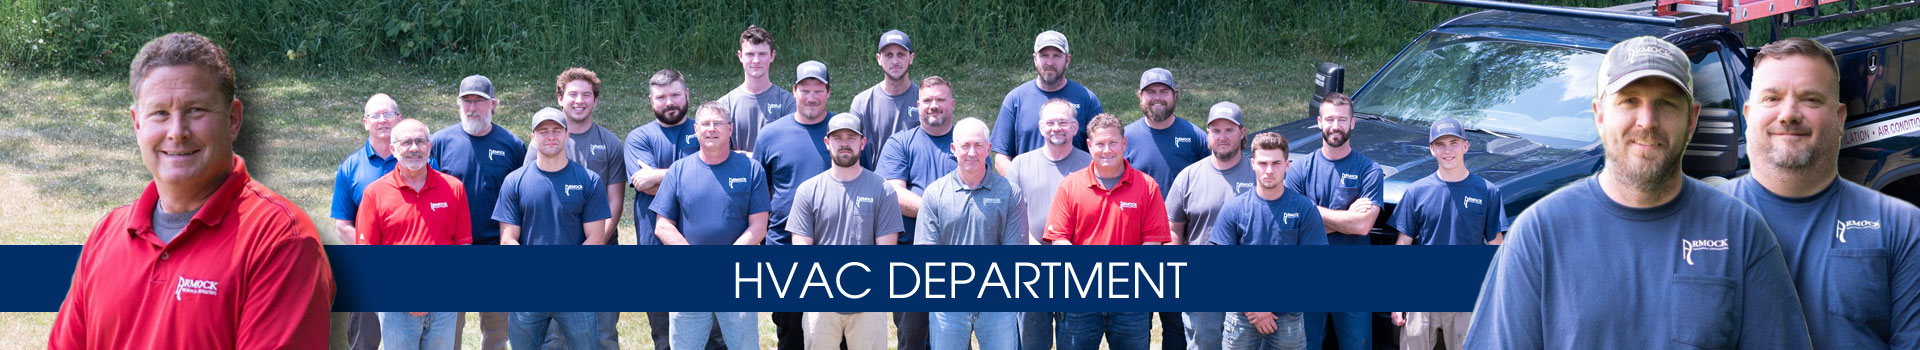 HVAC Dept Group Photo